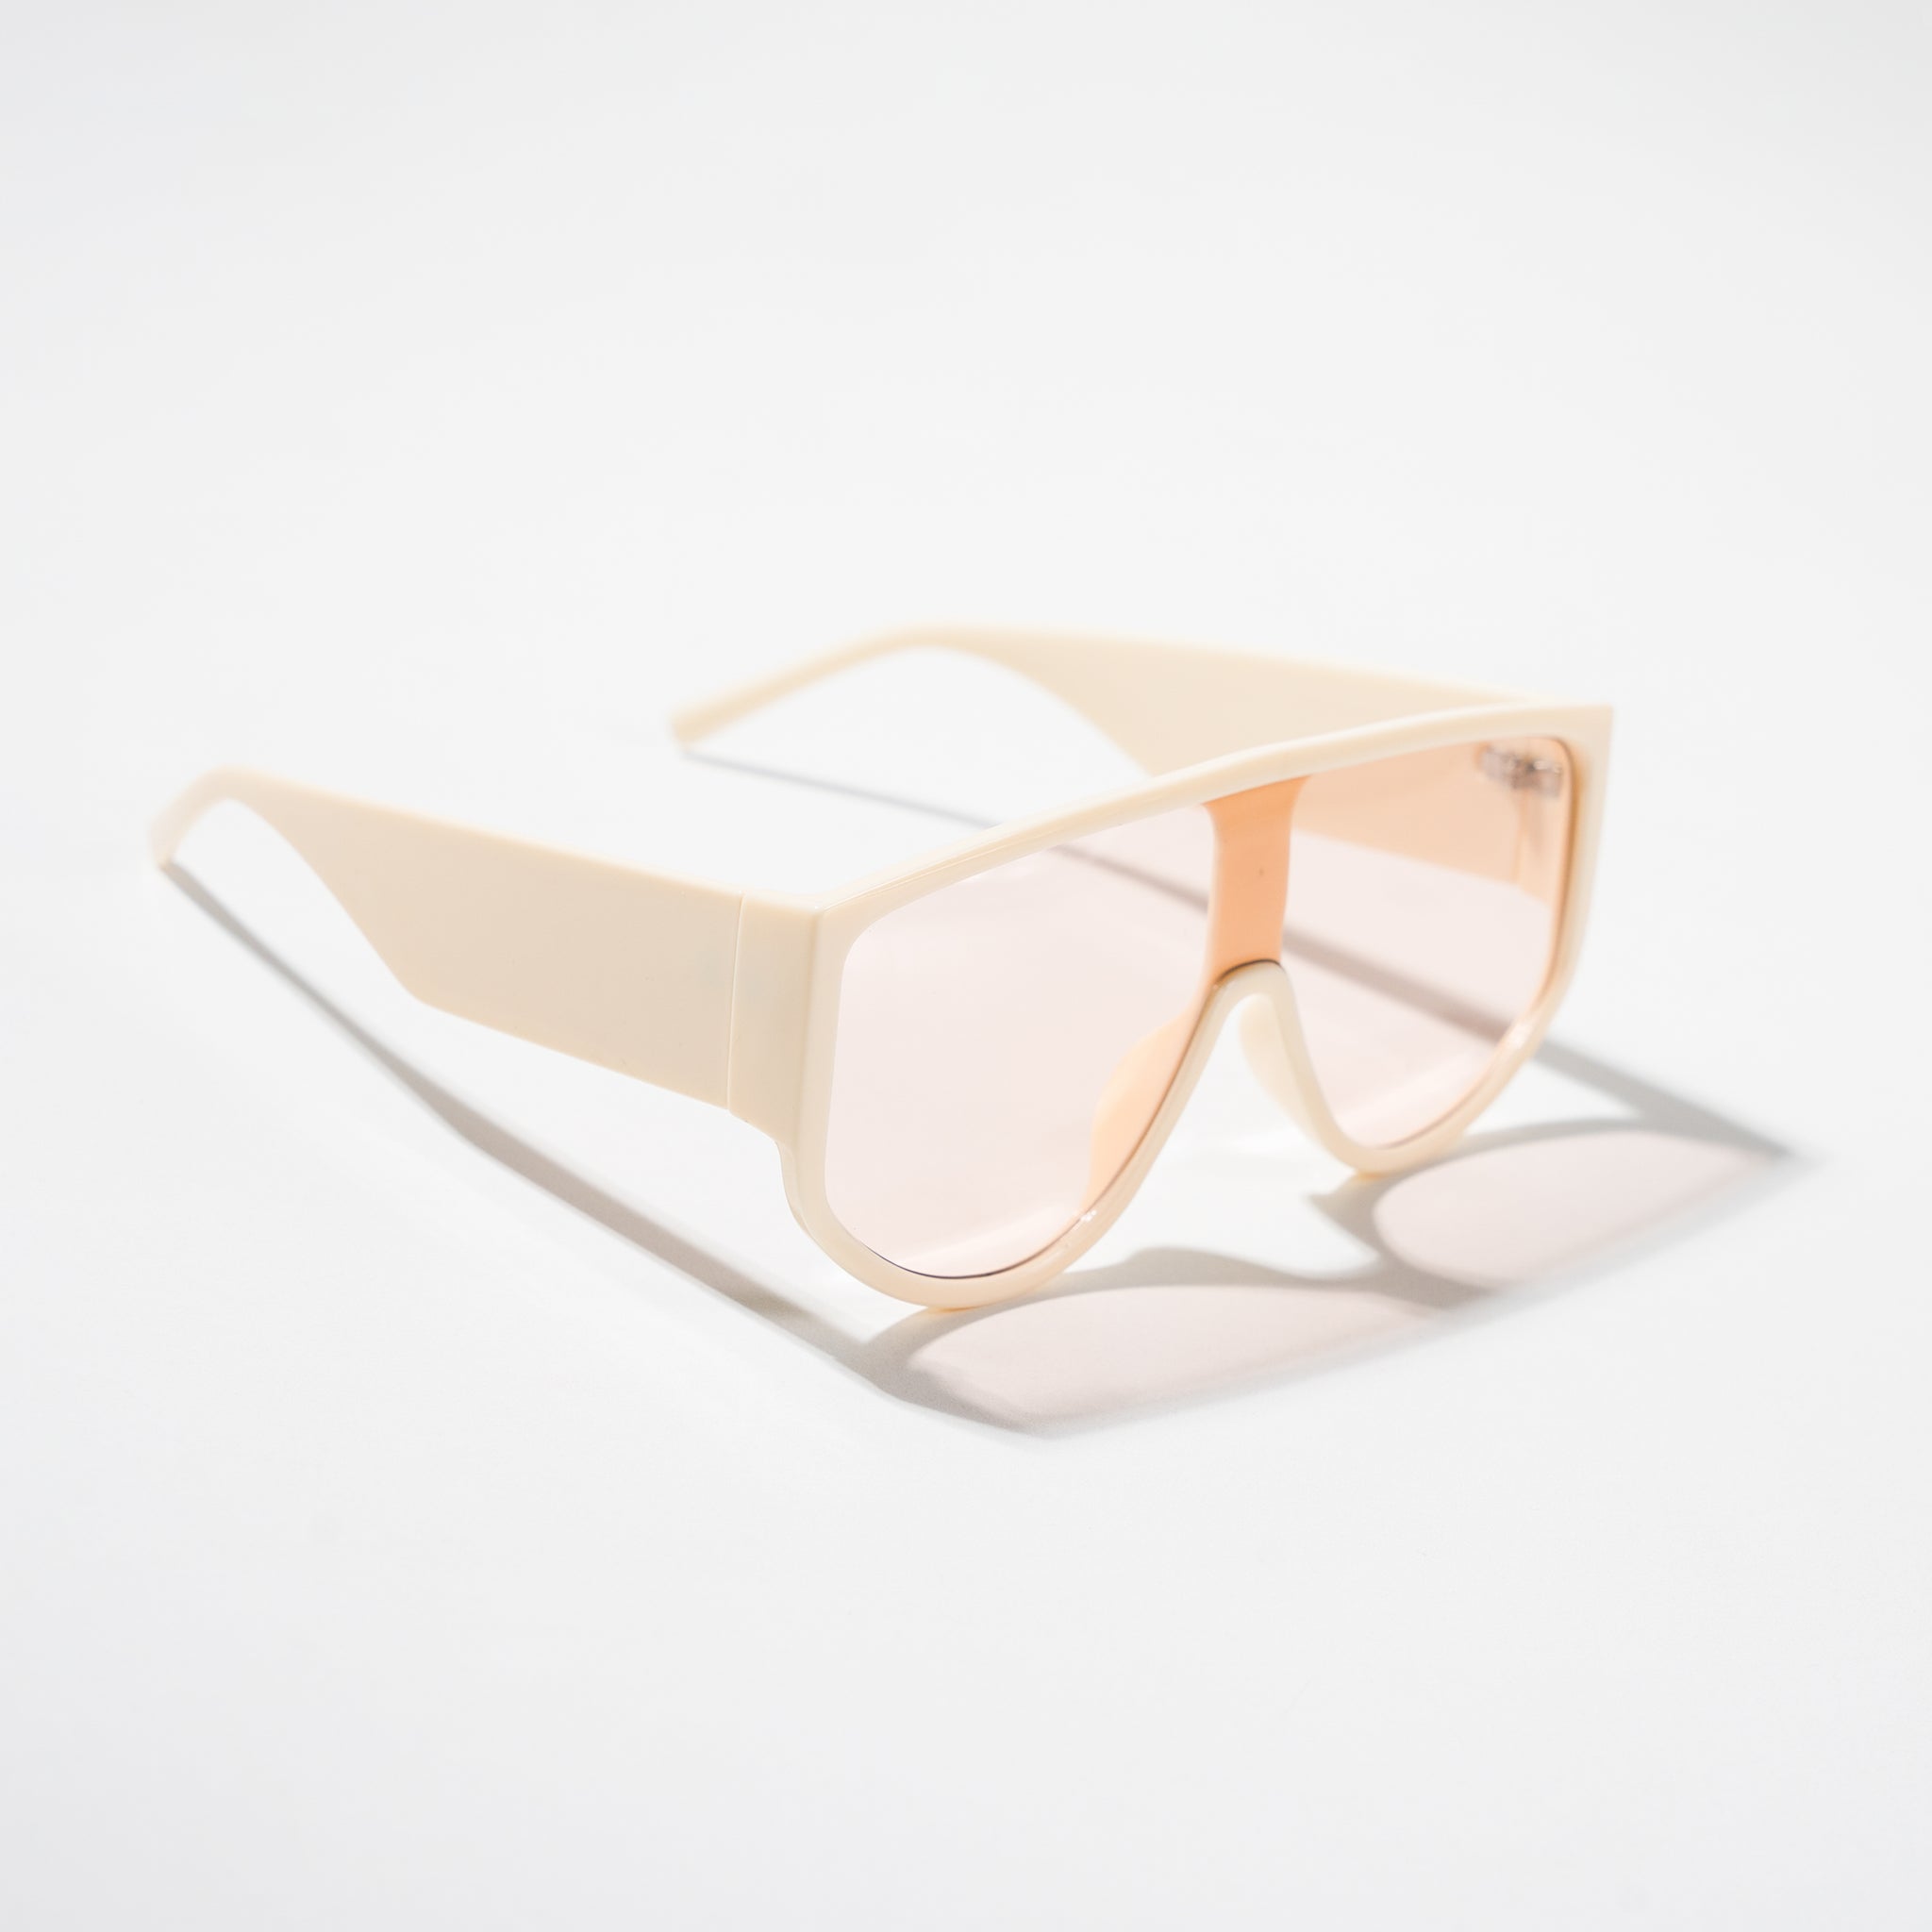 Chokore Retro Oversized UV-400 Protected Sunglasses (White)